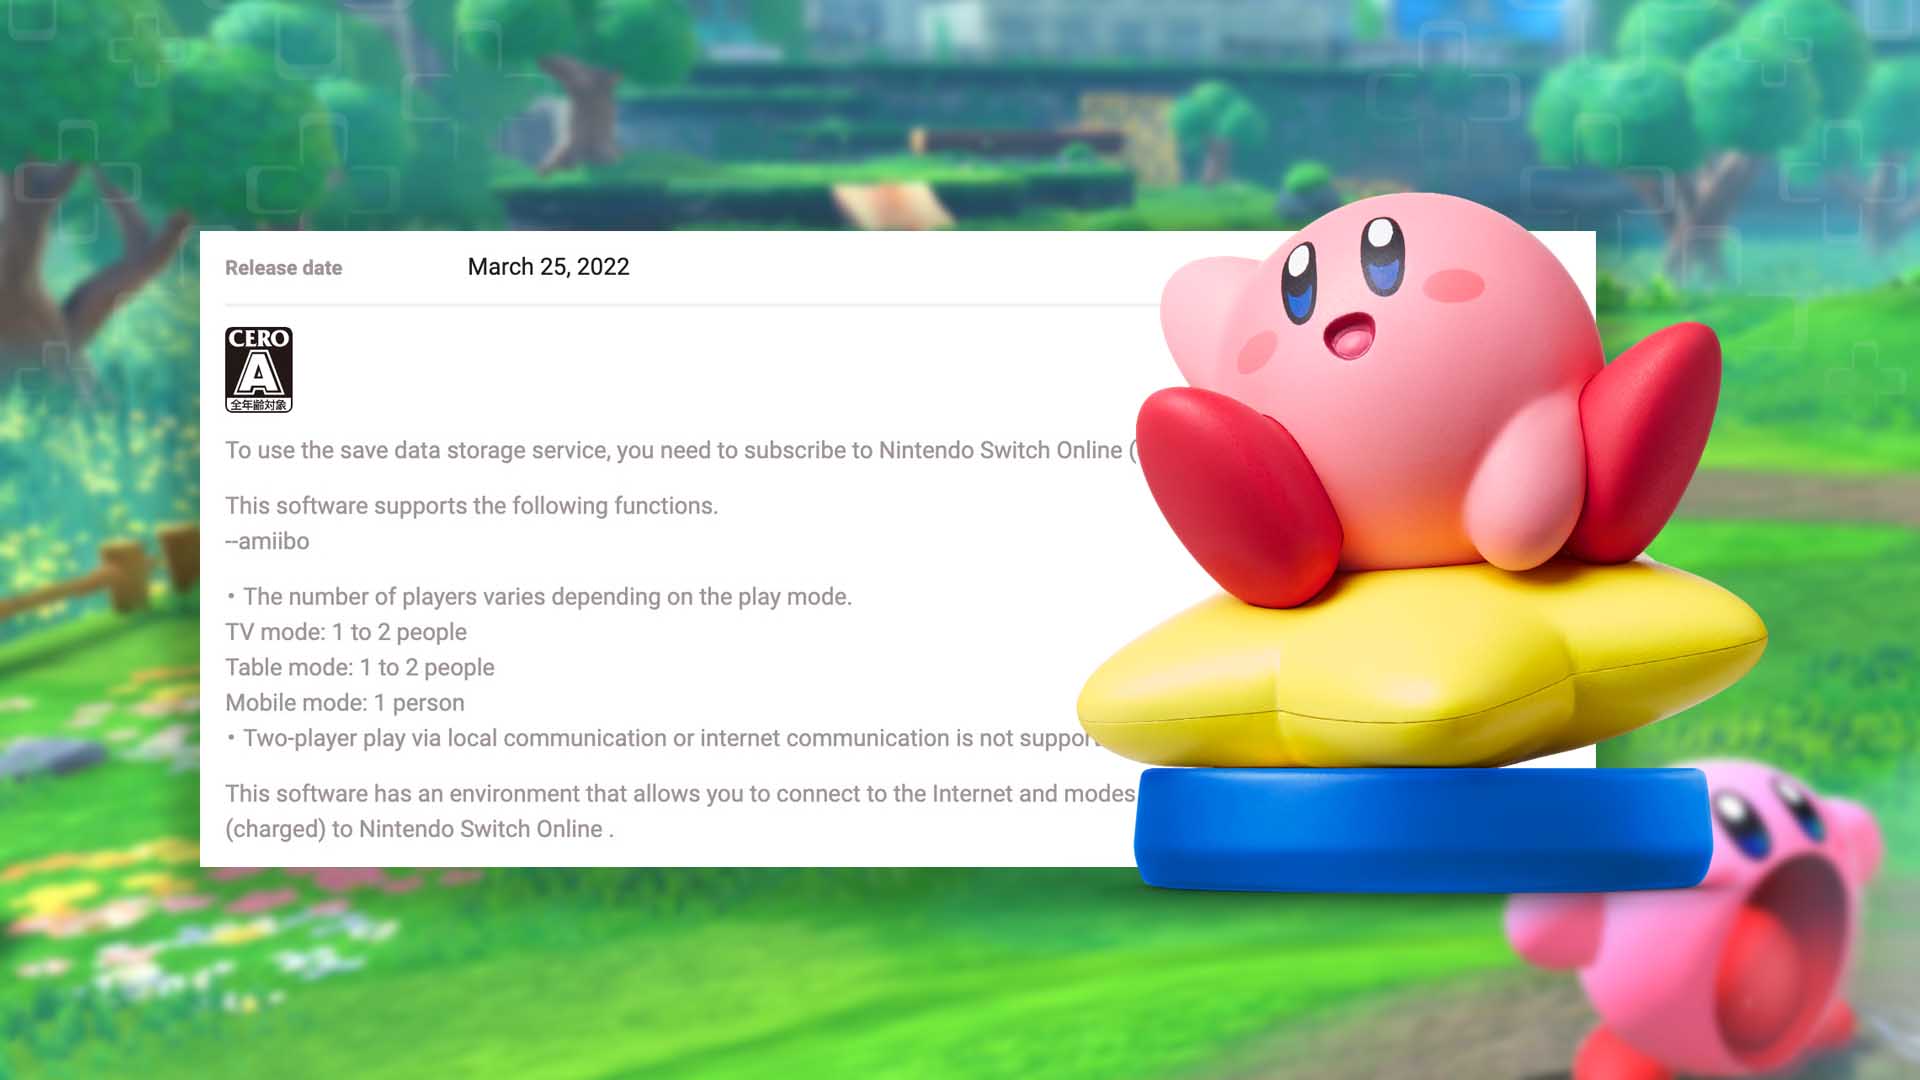 Amiibo Kirby Nintendo Switch